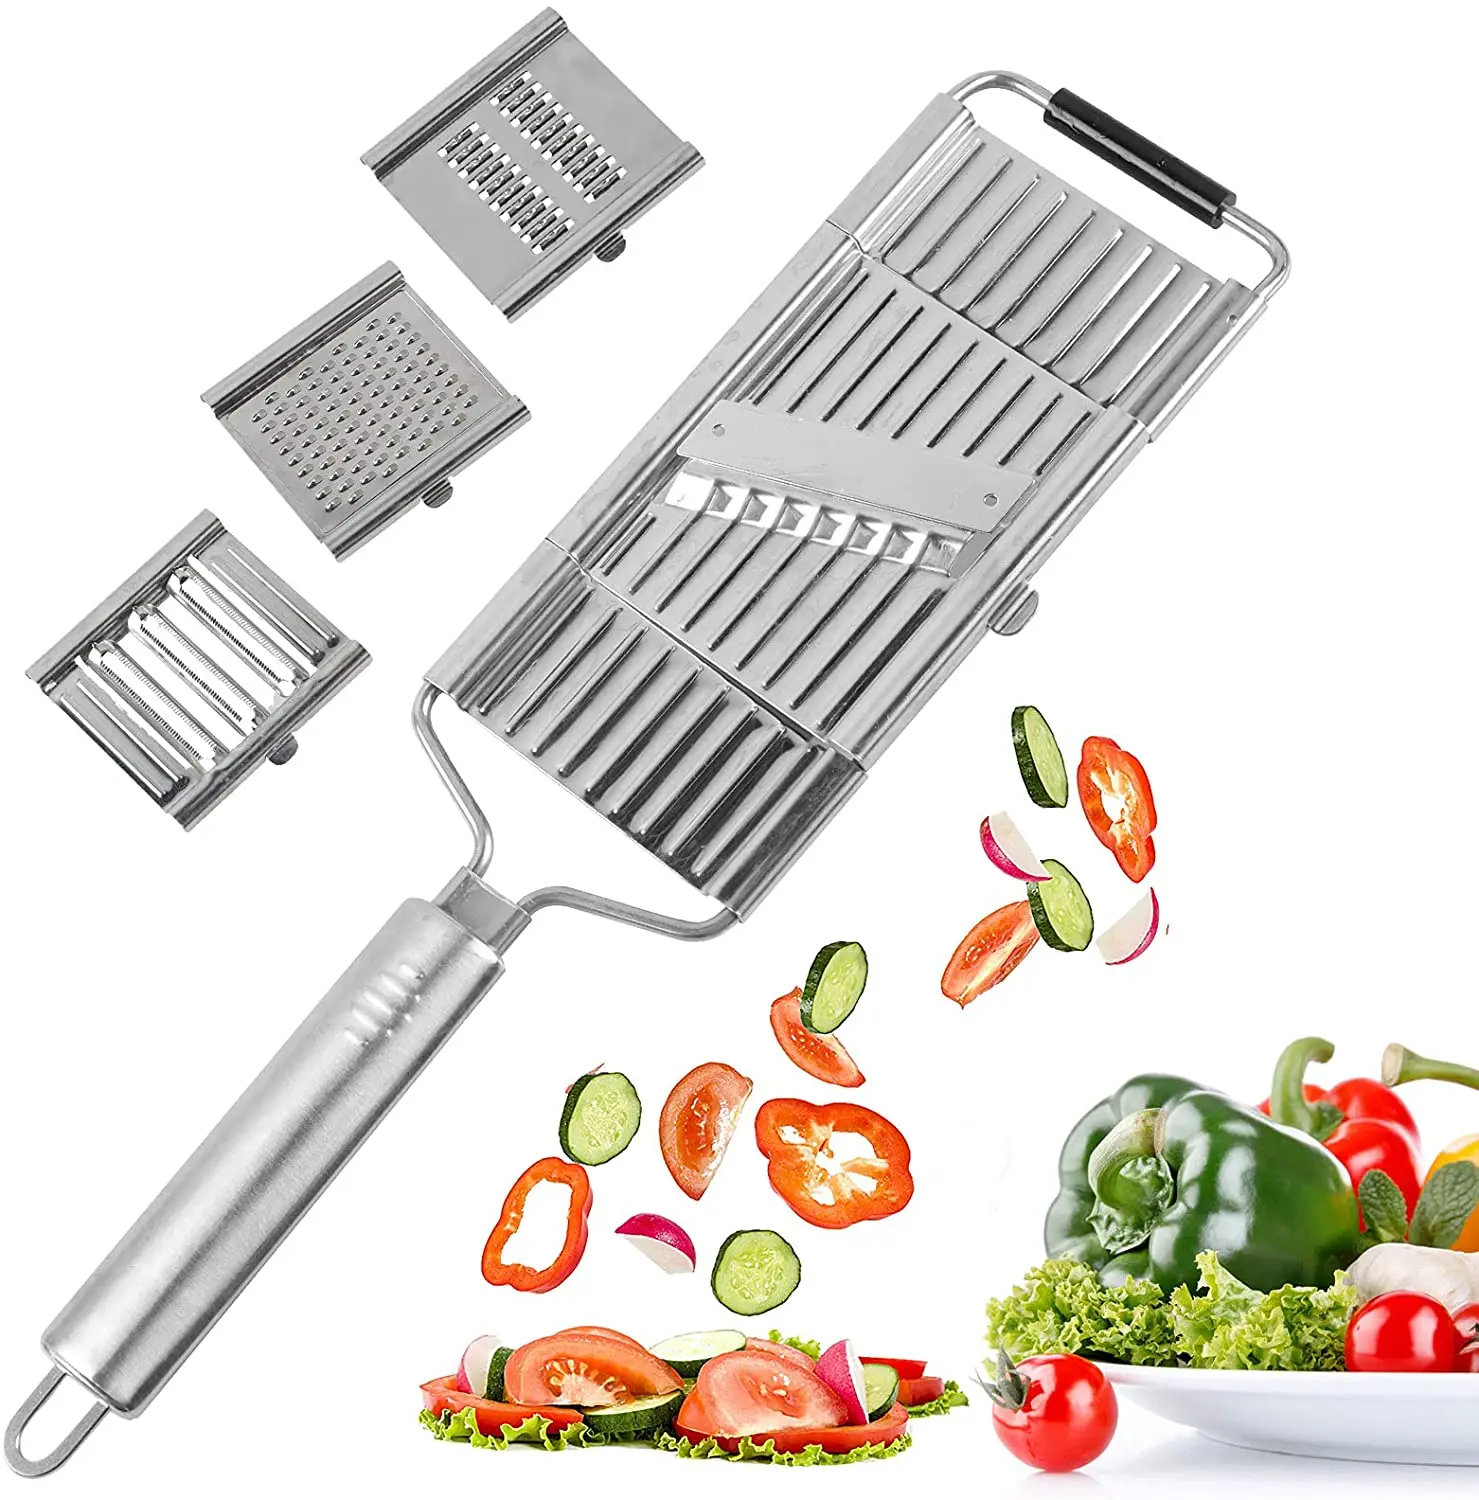 

Amazon kitchen gadgets Cheese Grater Kitchen Hand-held Shredder Cutter Grater Slicer 4 in 1 Multi Purpose Vegetable Slicer, Silver